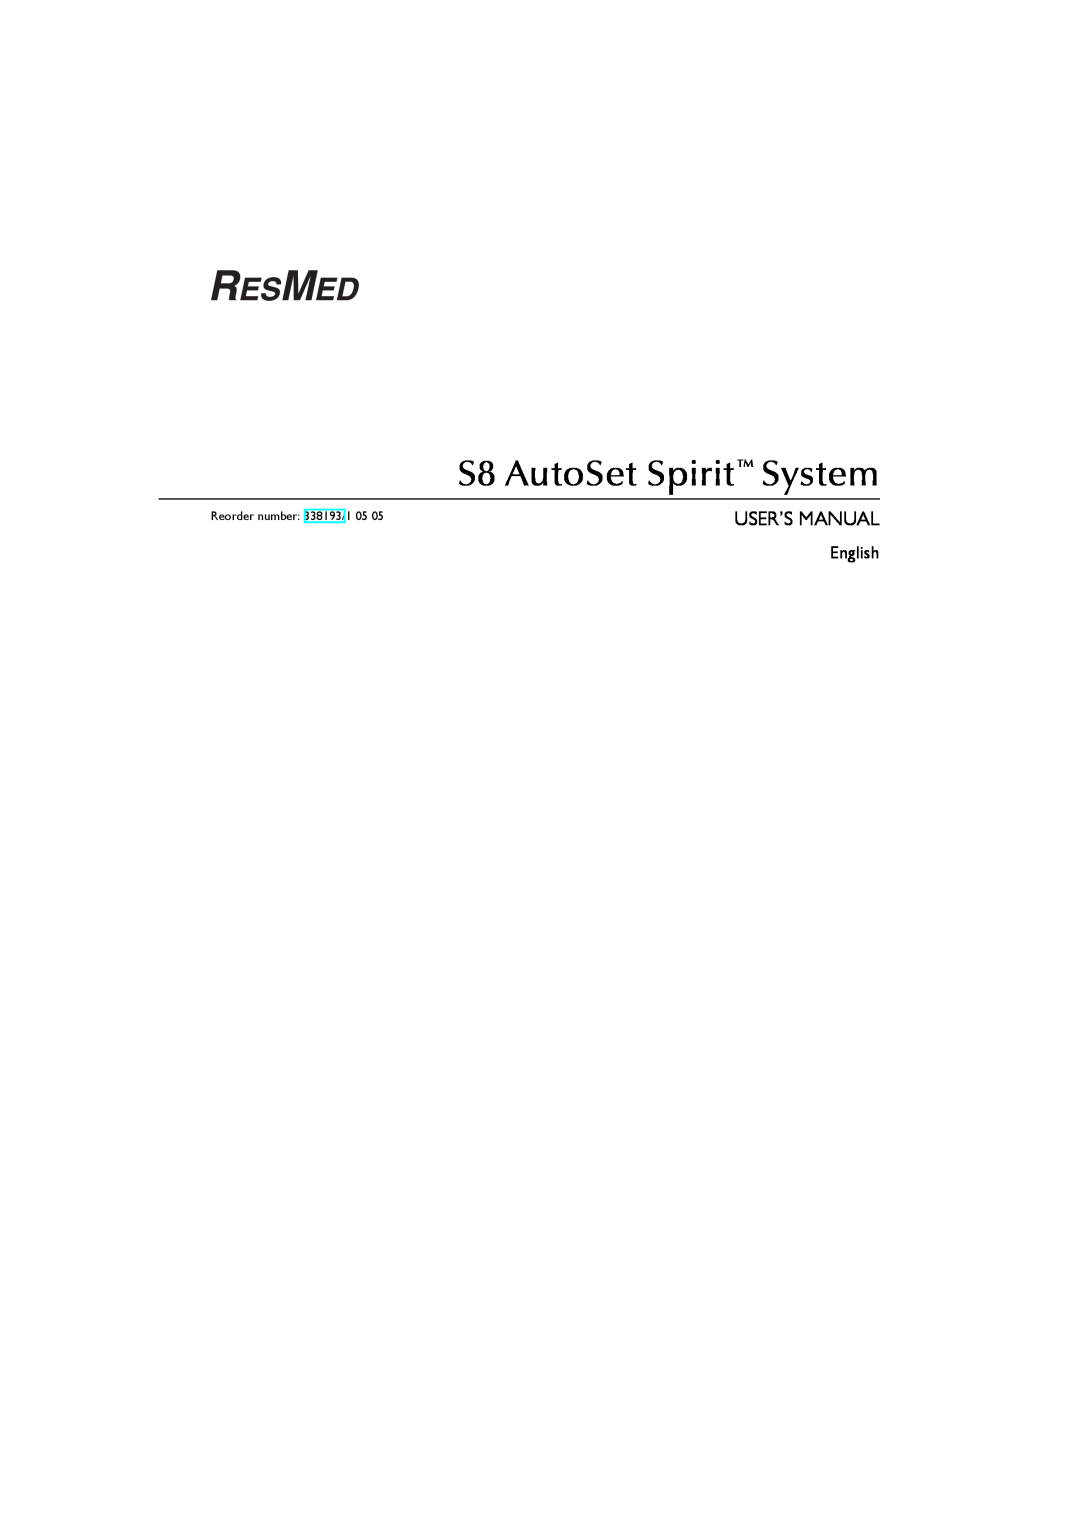 ResMed s8 manual S8 AutoSet Spirit System, Reorder number 338193/1 